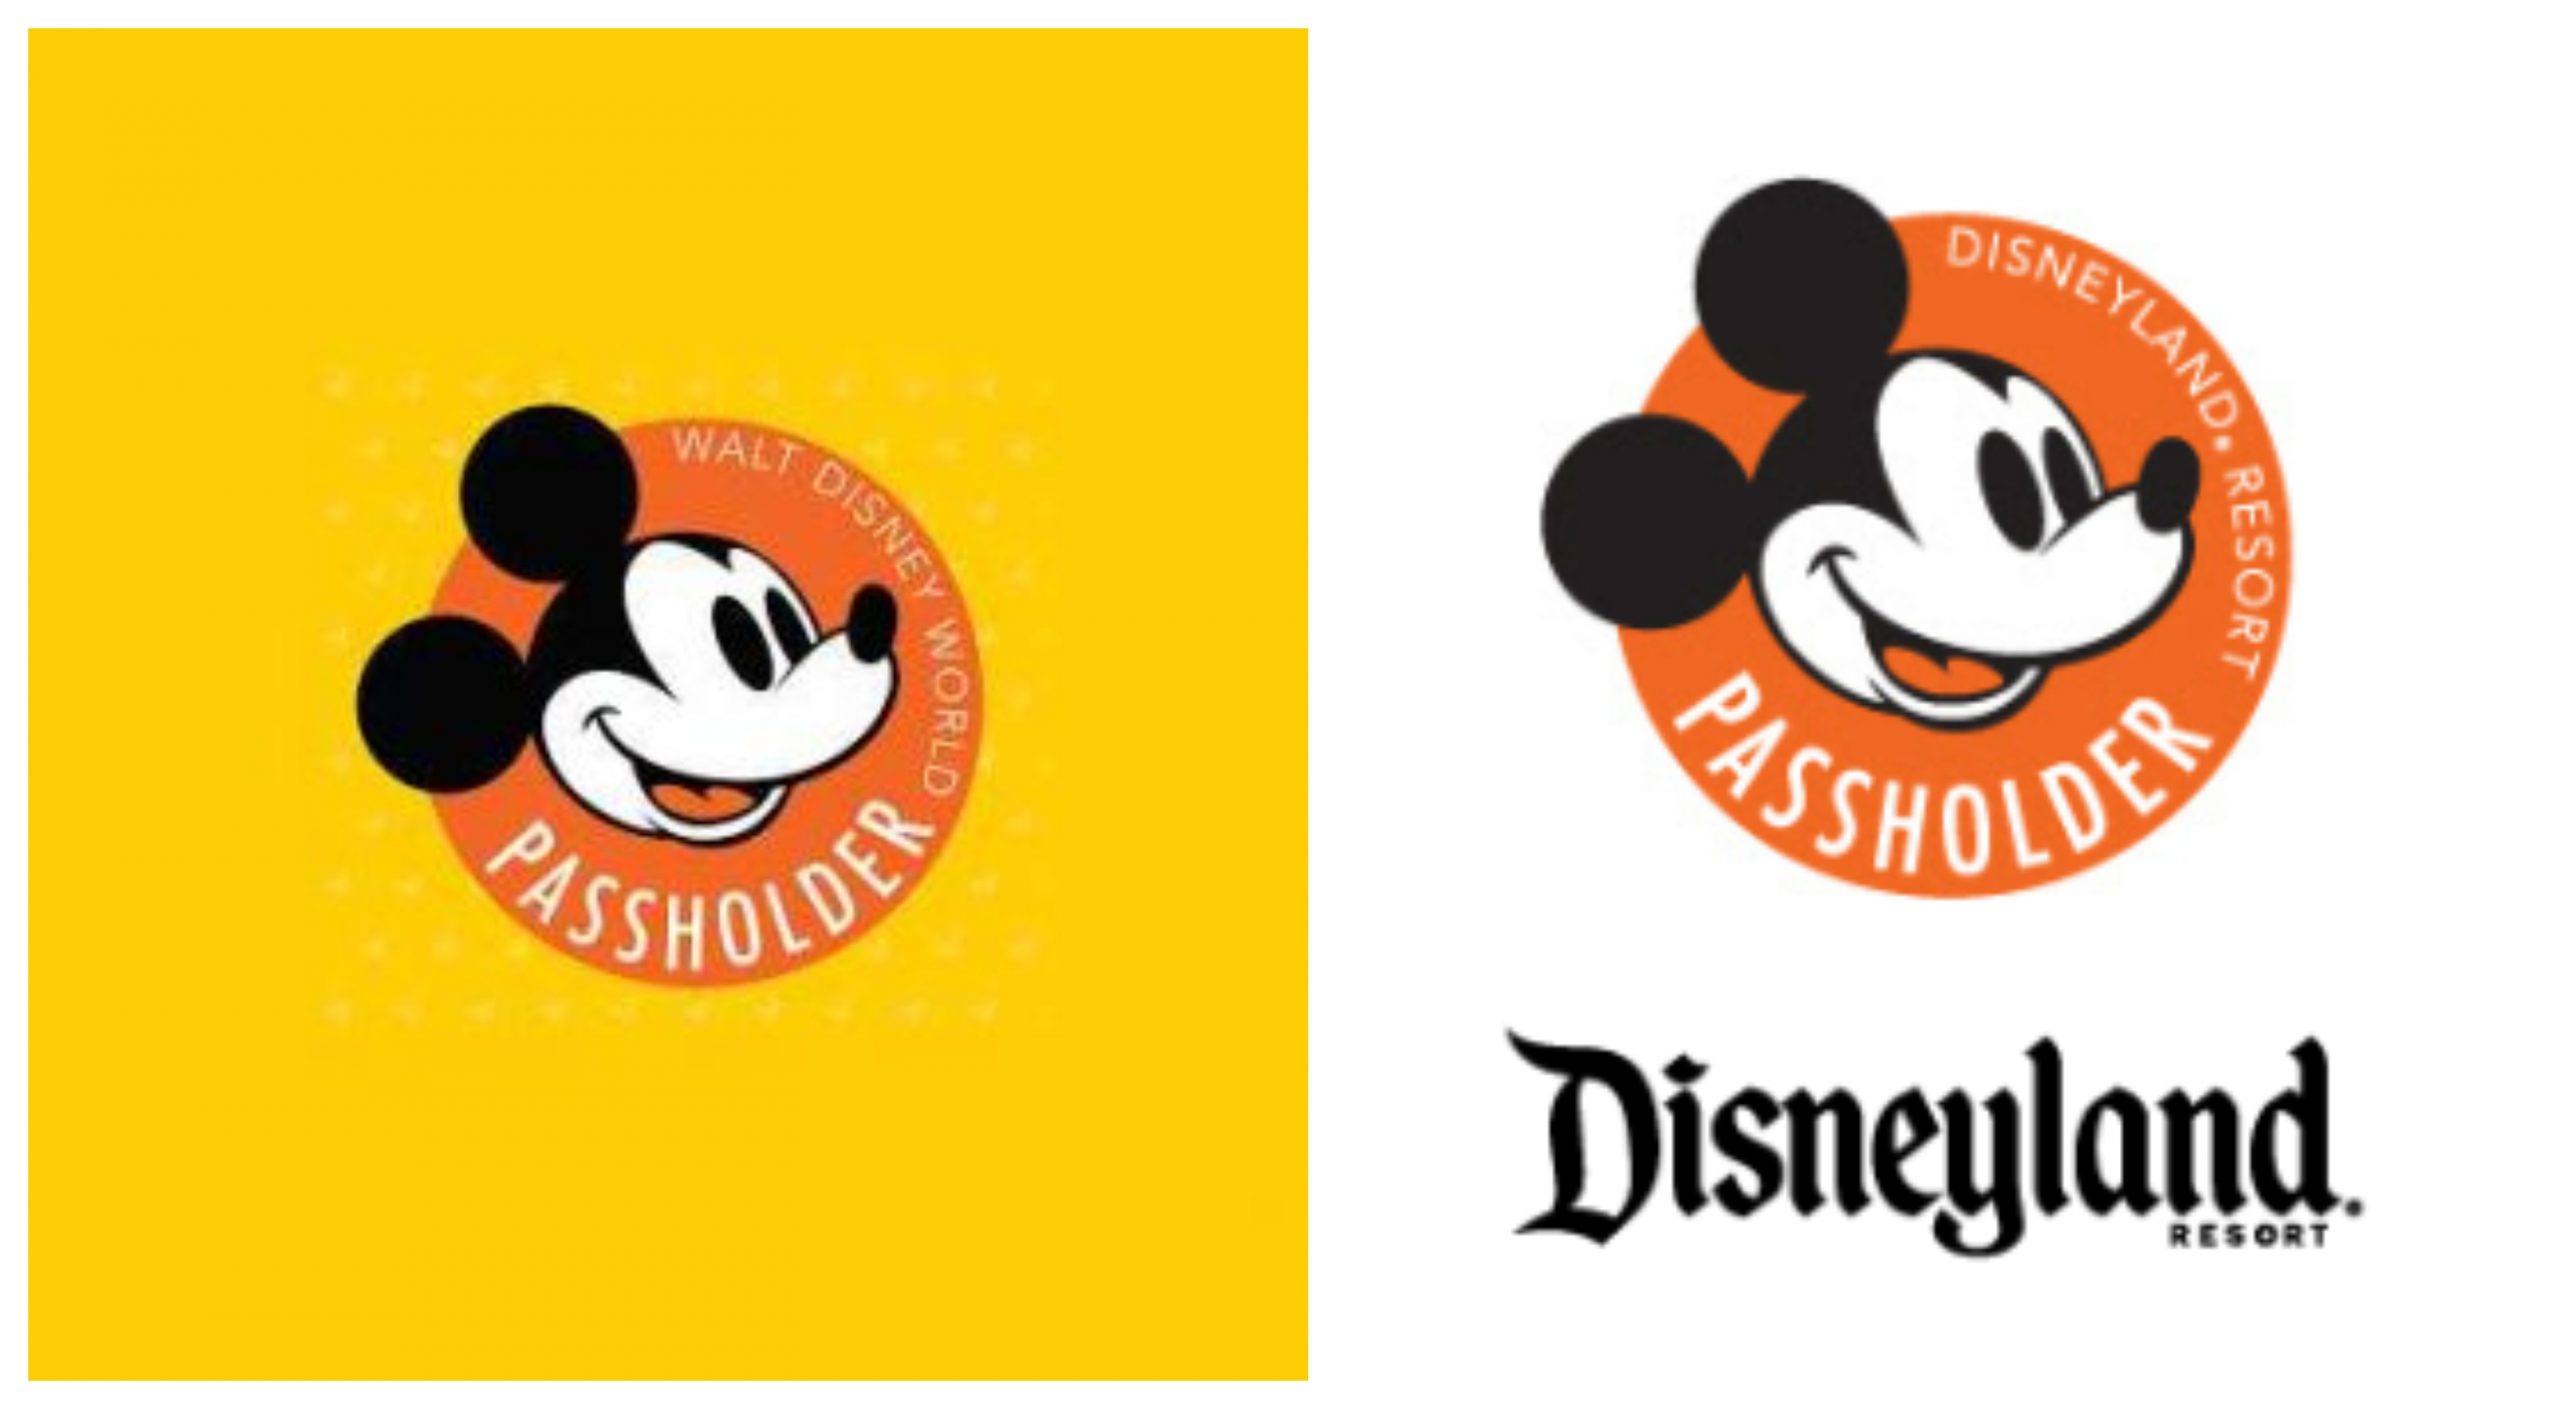 Disney World & Disneyland releases passholder update